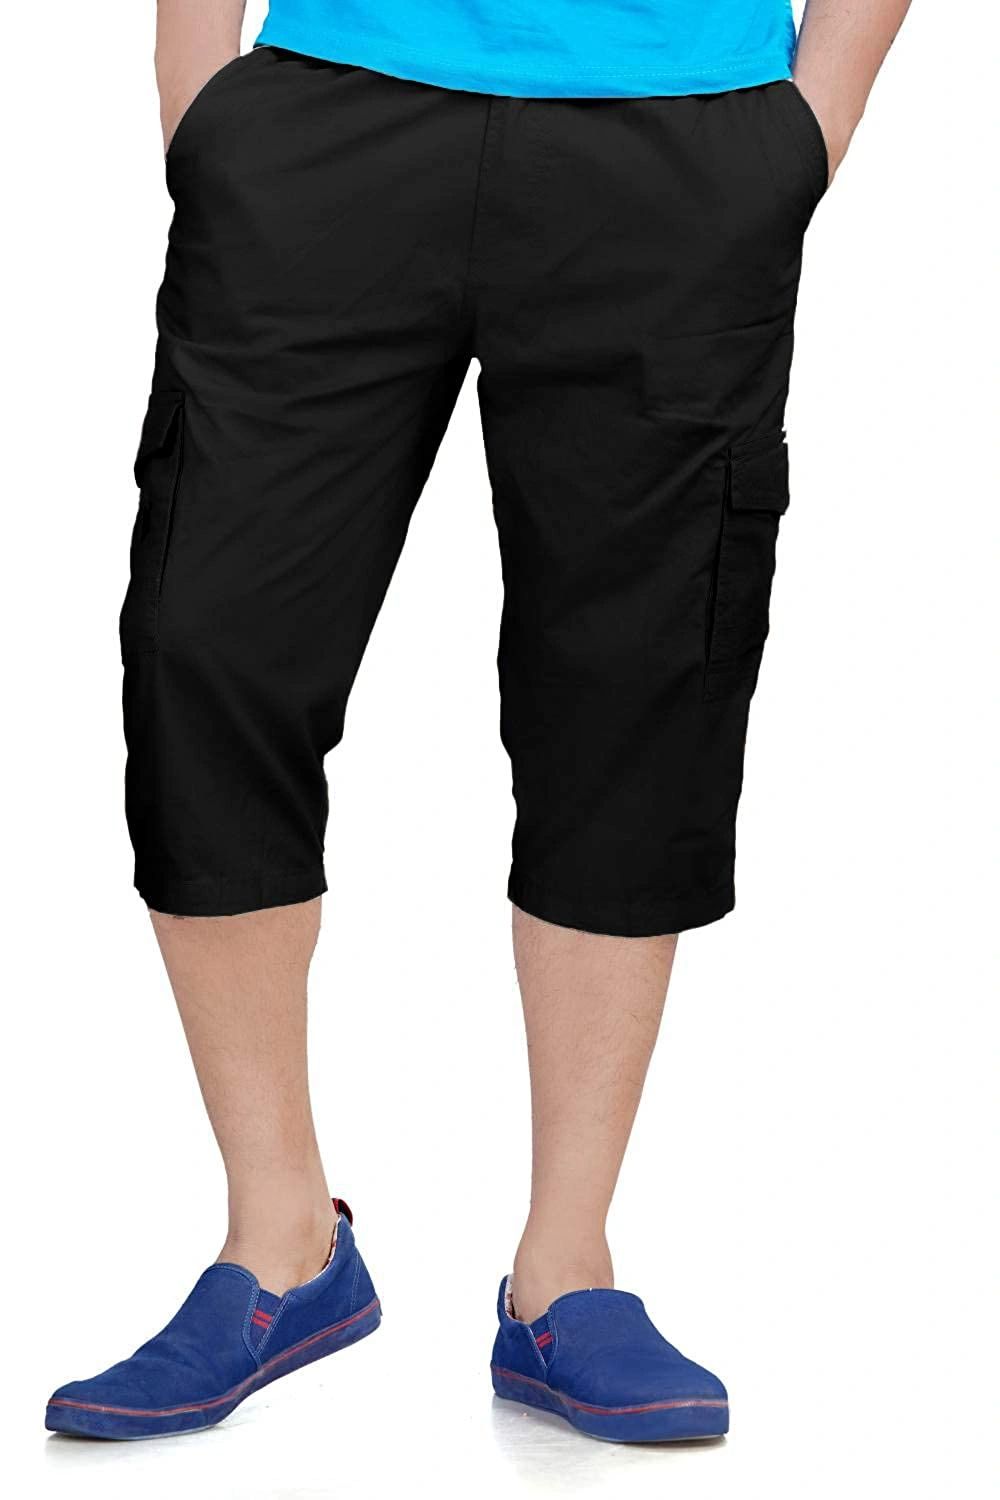 Lyra 3/4 Track Pants - 302, Men 3/4 Pants, मेंस थ्री फोर्थ पैंट, पुरुष की  थ्री फोर्थ पैंट - Excelsior India, New Delhi | ID: 25966708533